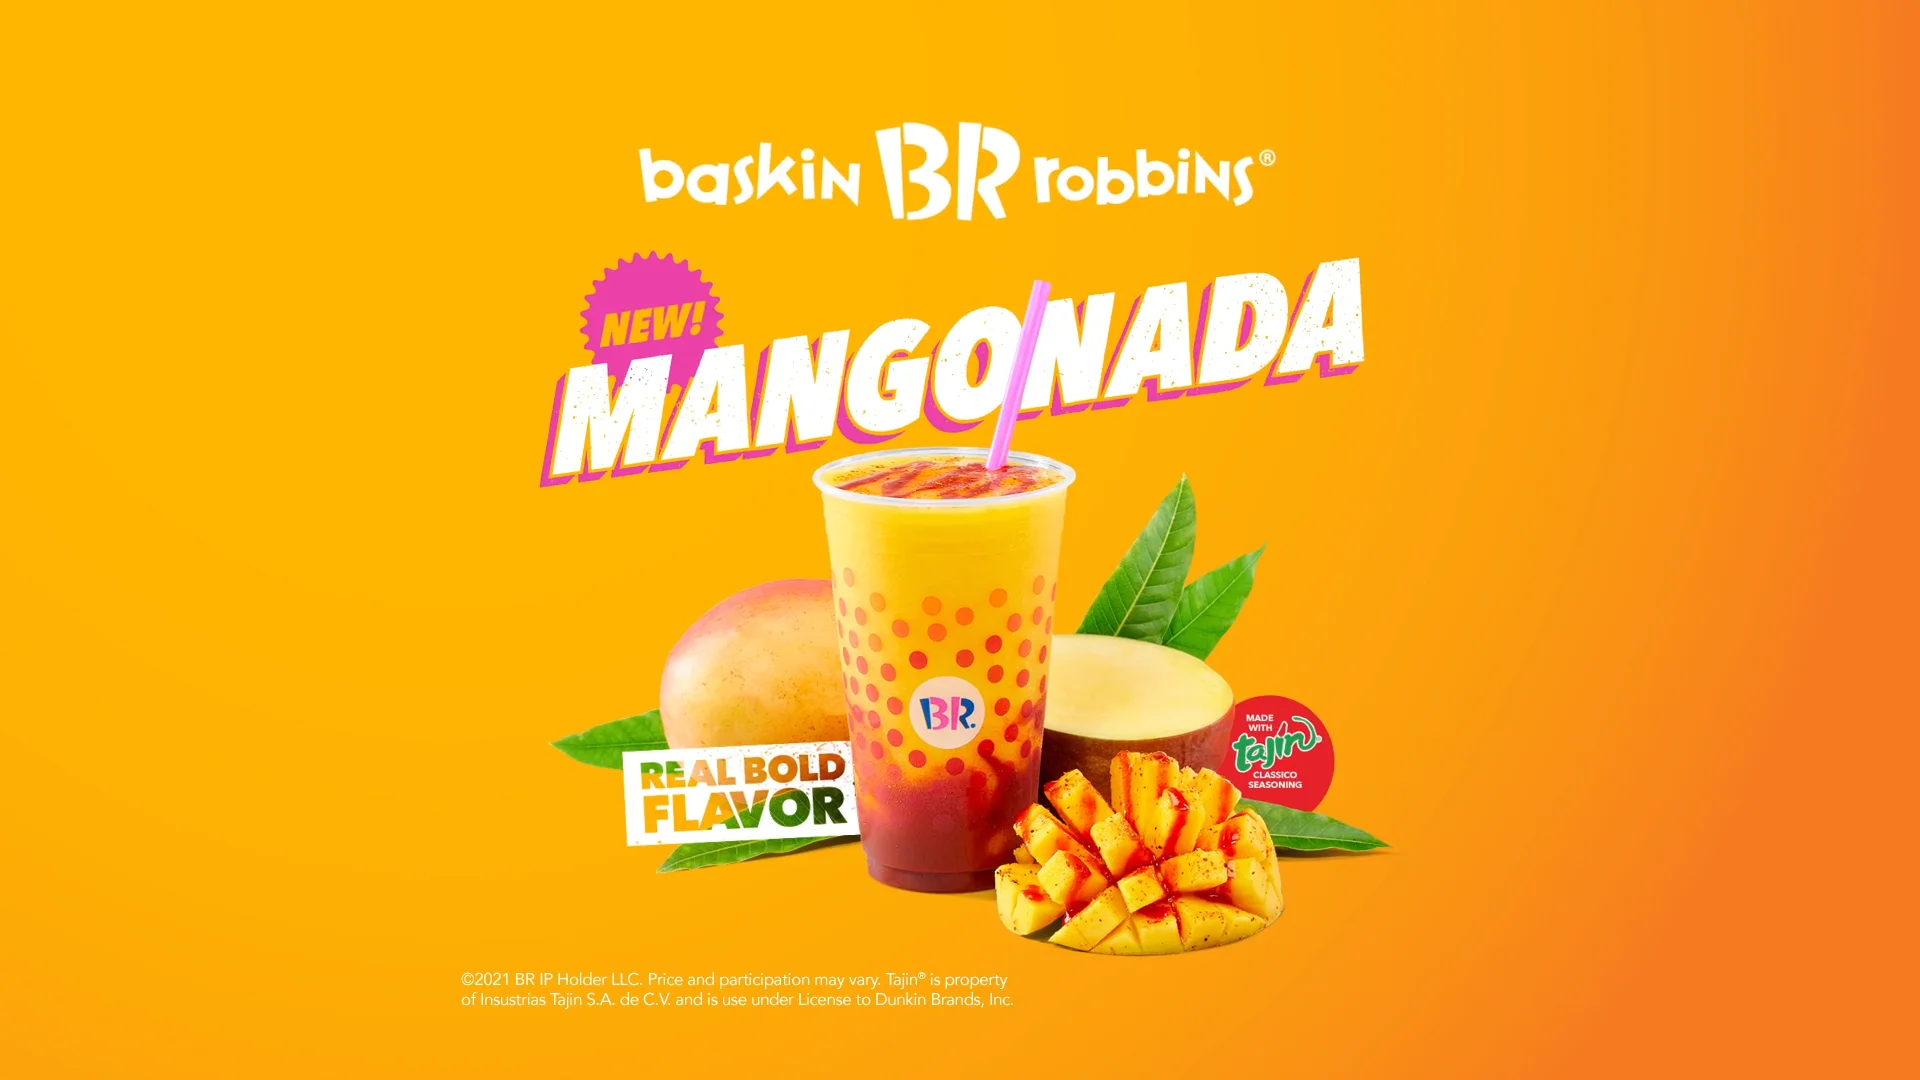 Baskin-Robbins - A Fruit Combo For the Ninja Warrior in